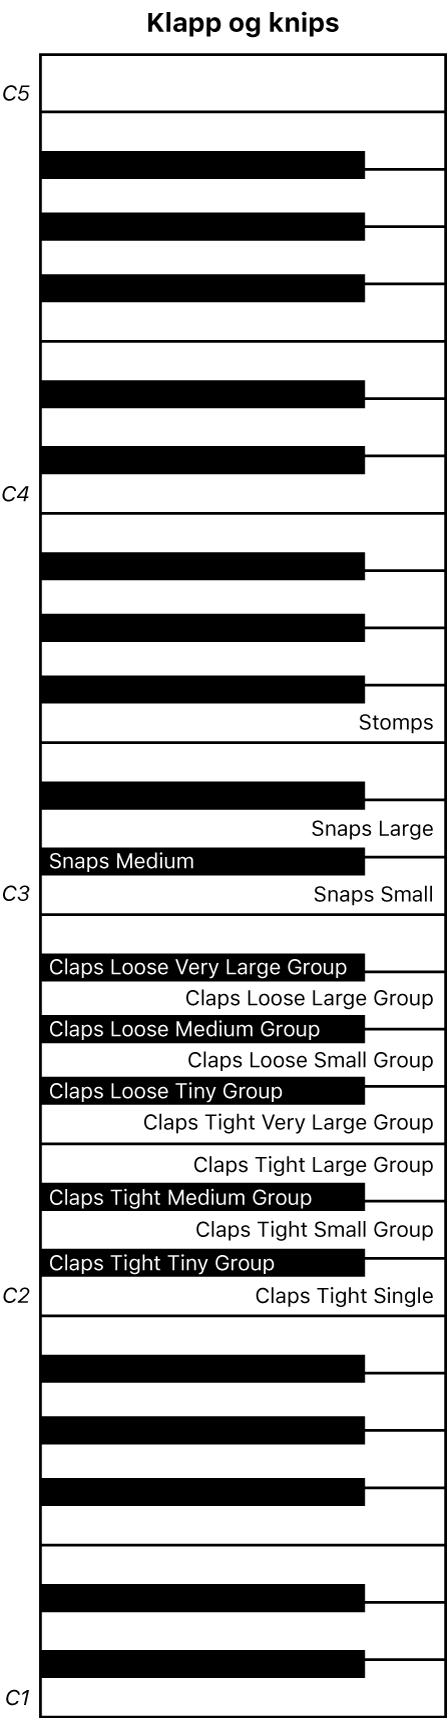 Figur. Framføringskeyboardtilordning for Claps and Snaps.